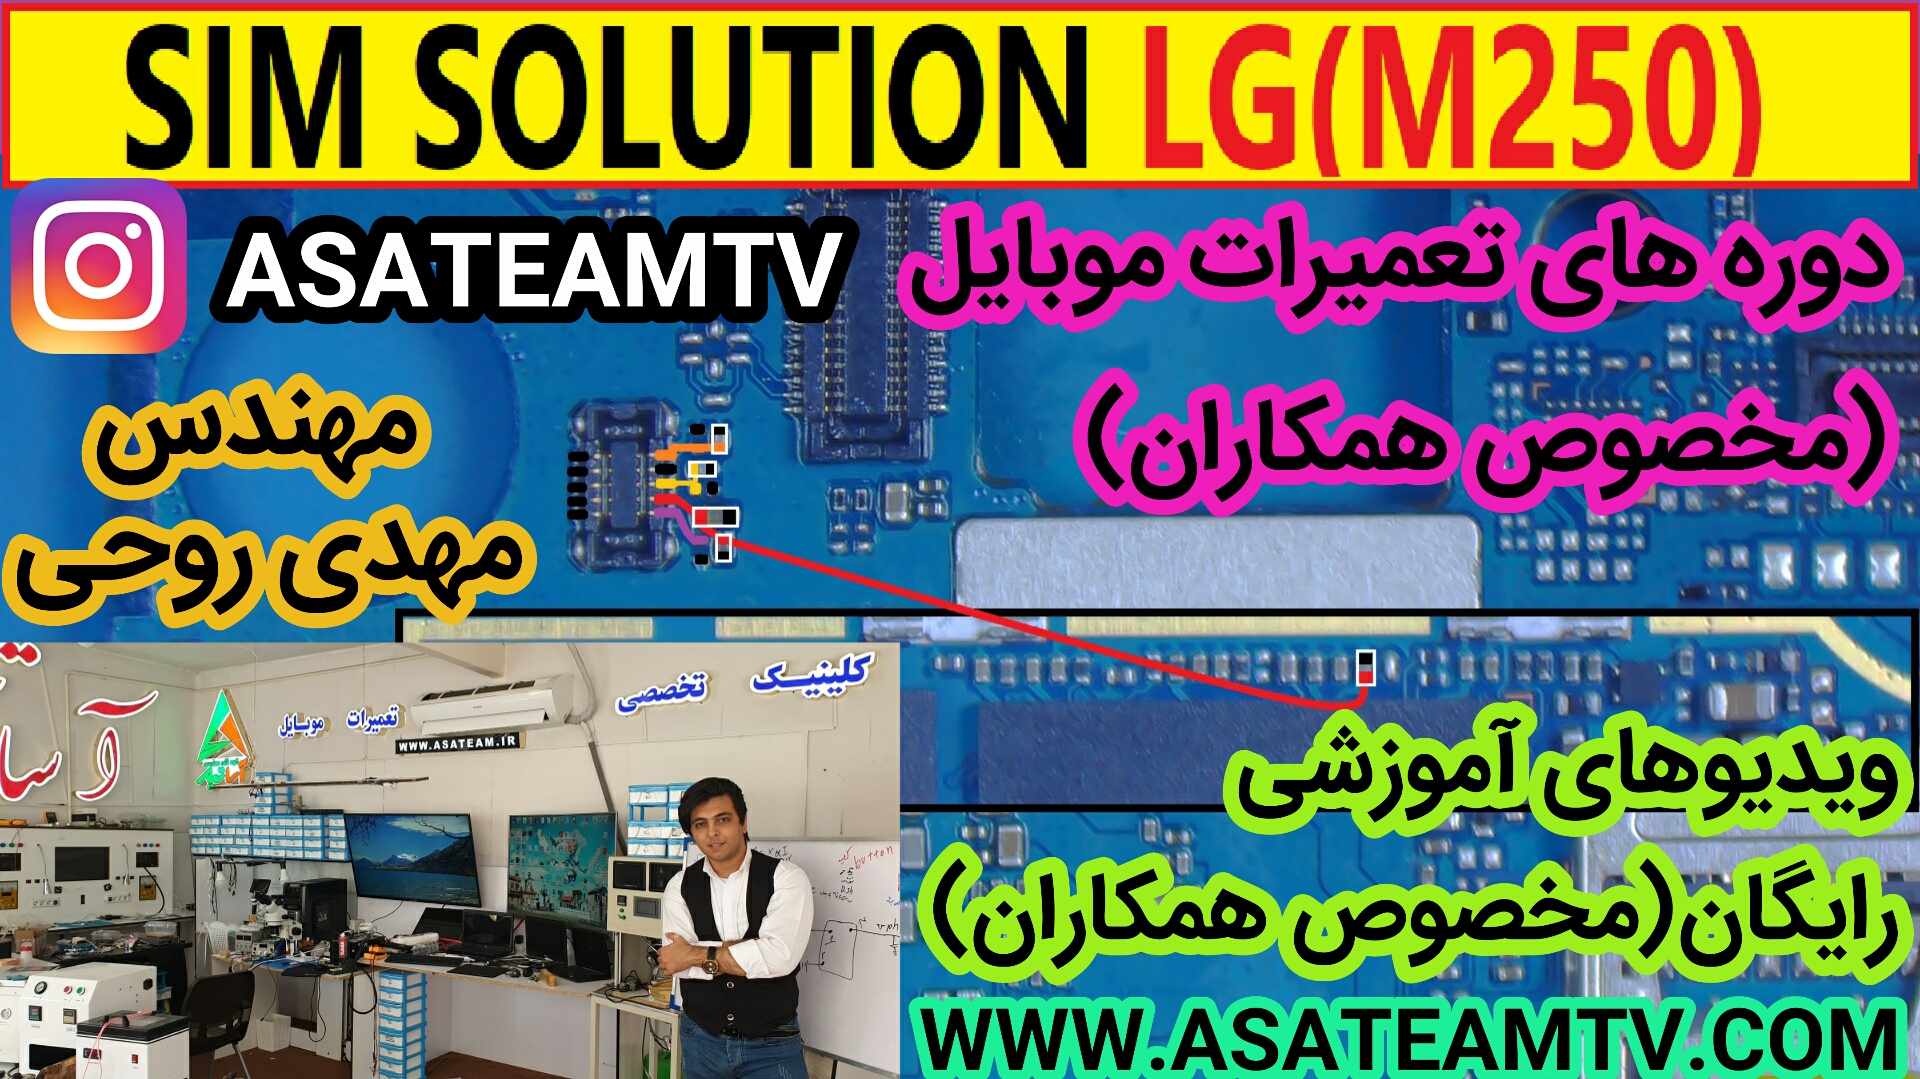  SIM SOLUTION M250